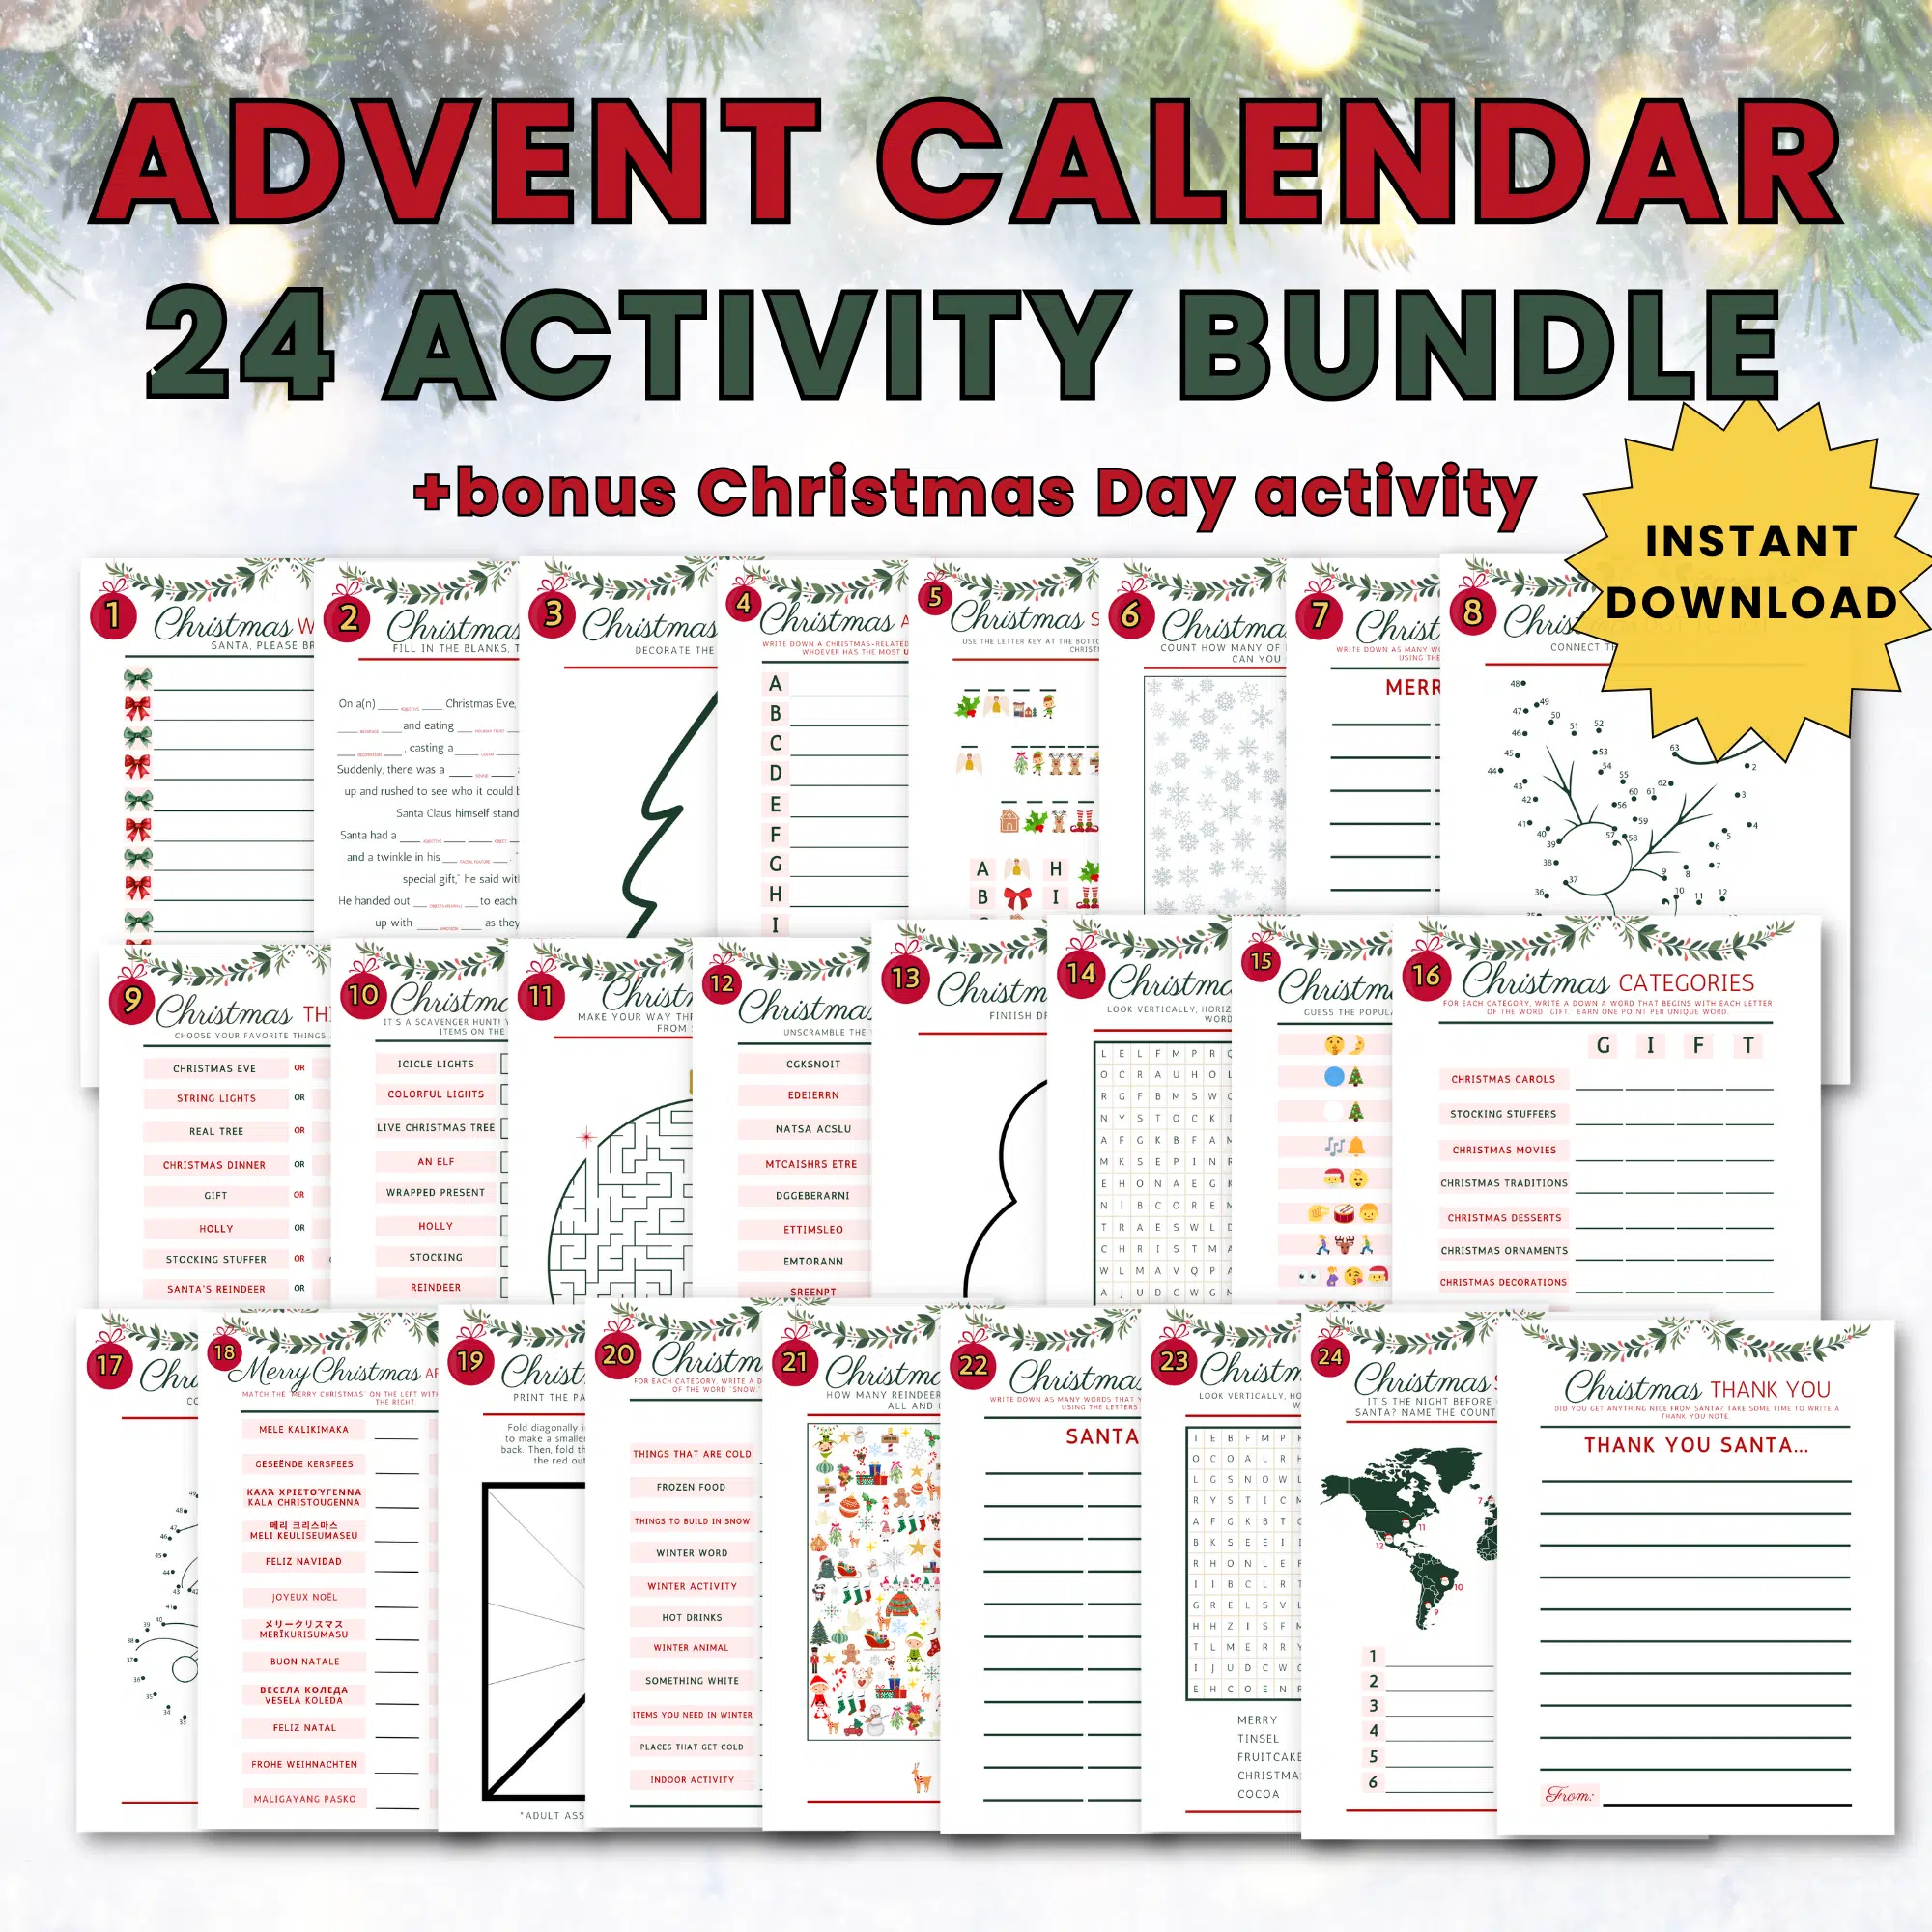 Advent Calendar 24 Activity Bundle +bonus Christmas Day activity - Instant Download